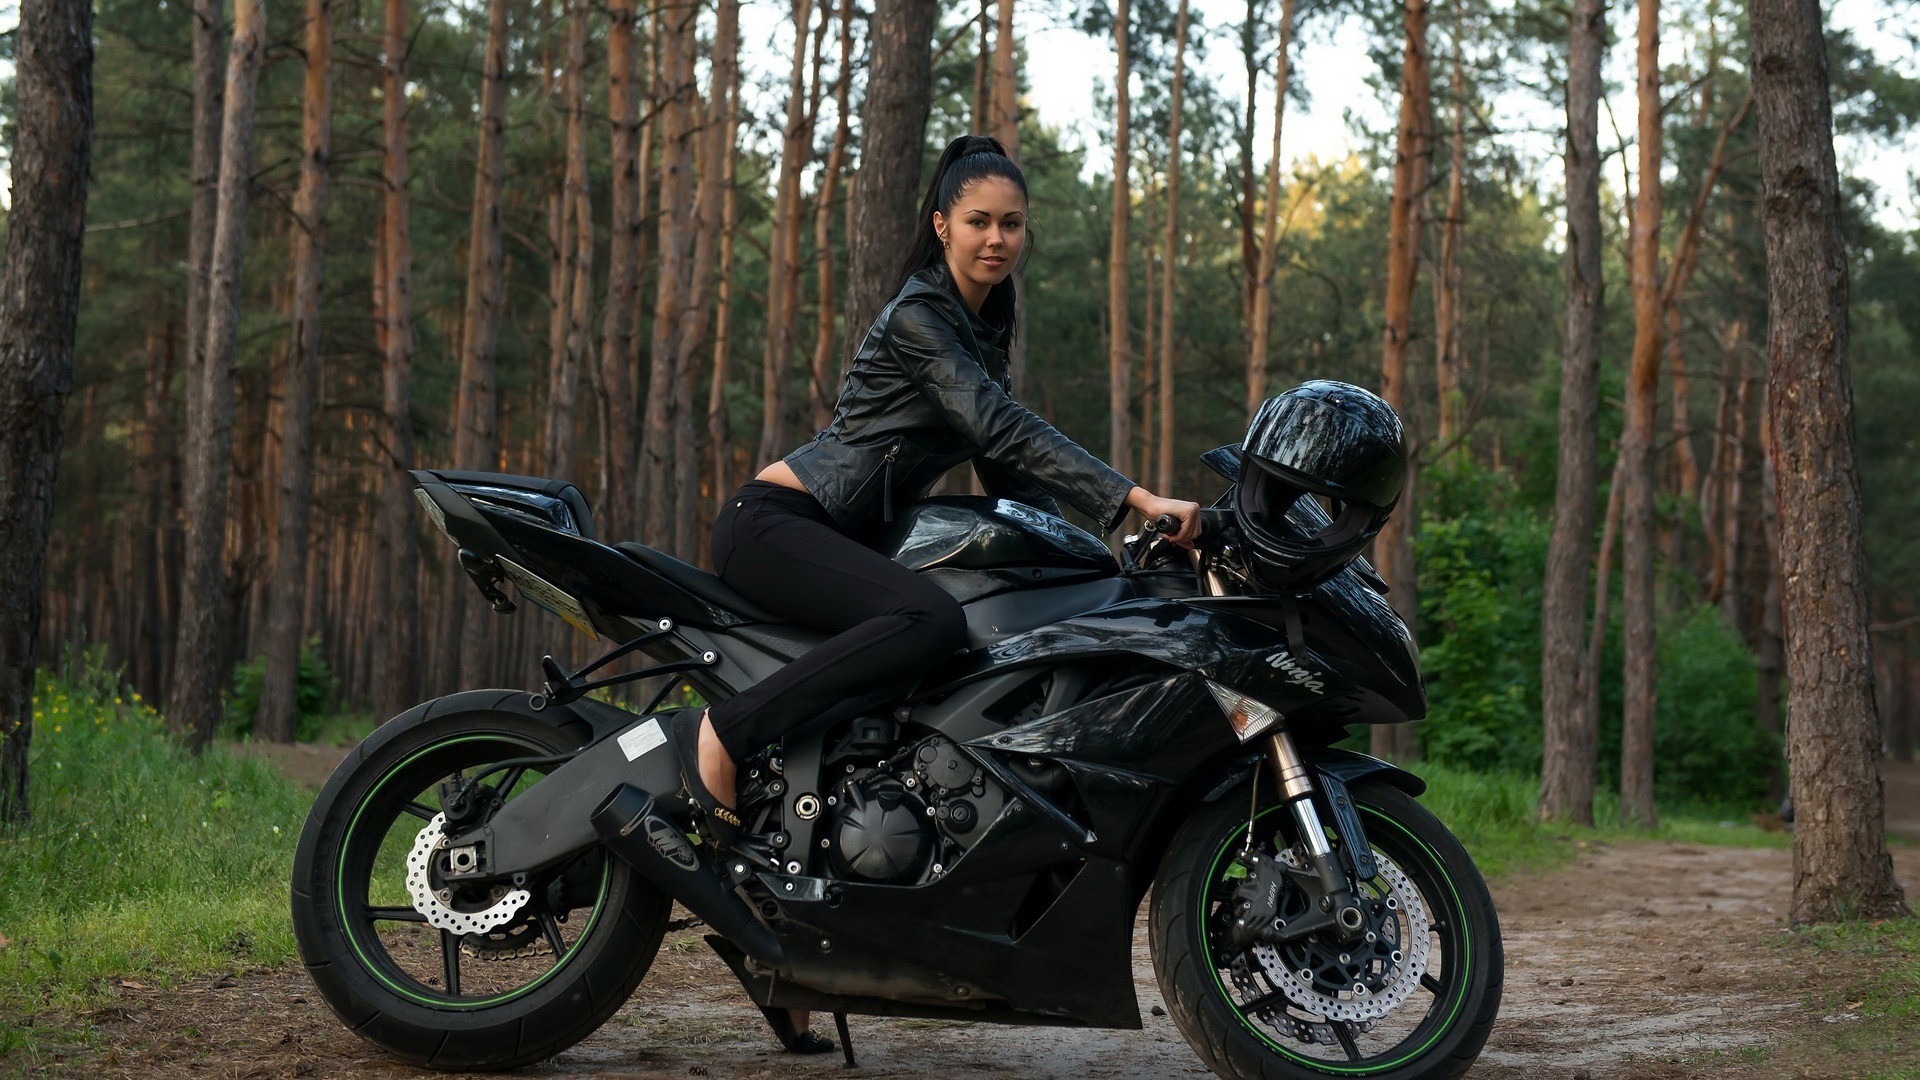 People 1920x1080 motorcycle Kawasaki ninja Macy B black hair MetArt women with motorcycles women women outdoors Ukrainian women vehicle black motorcycles